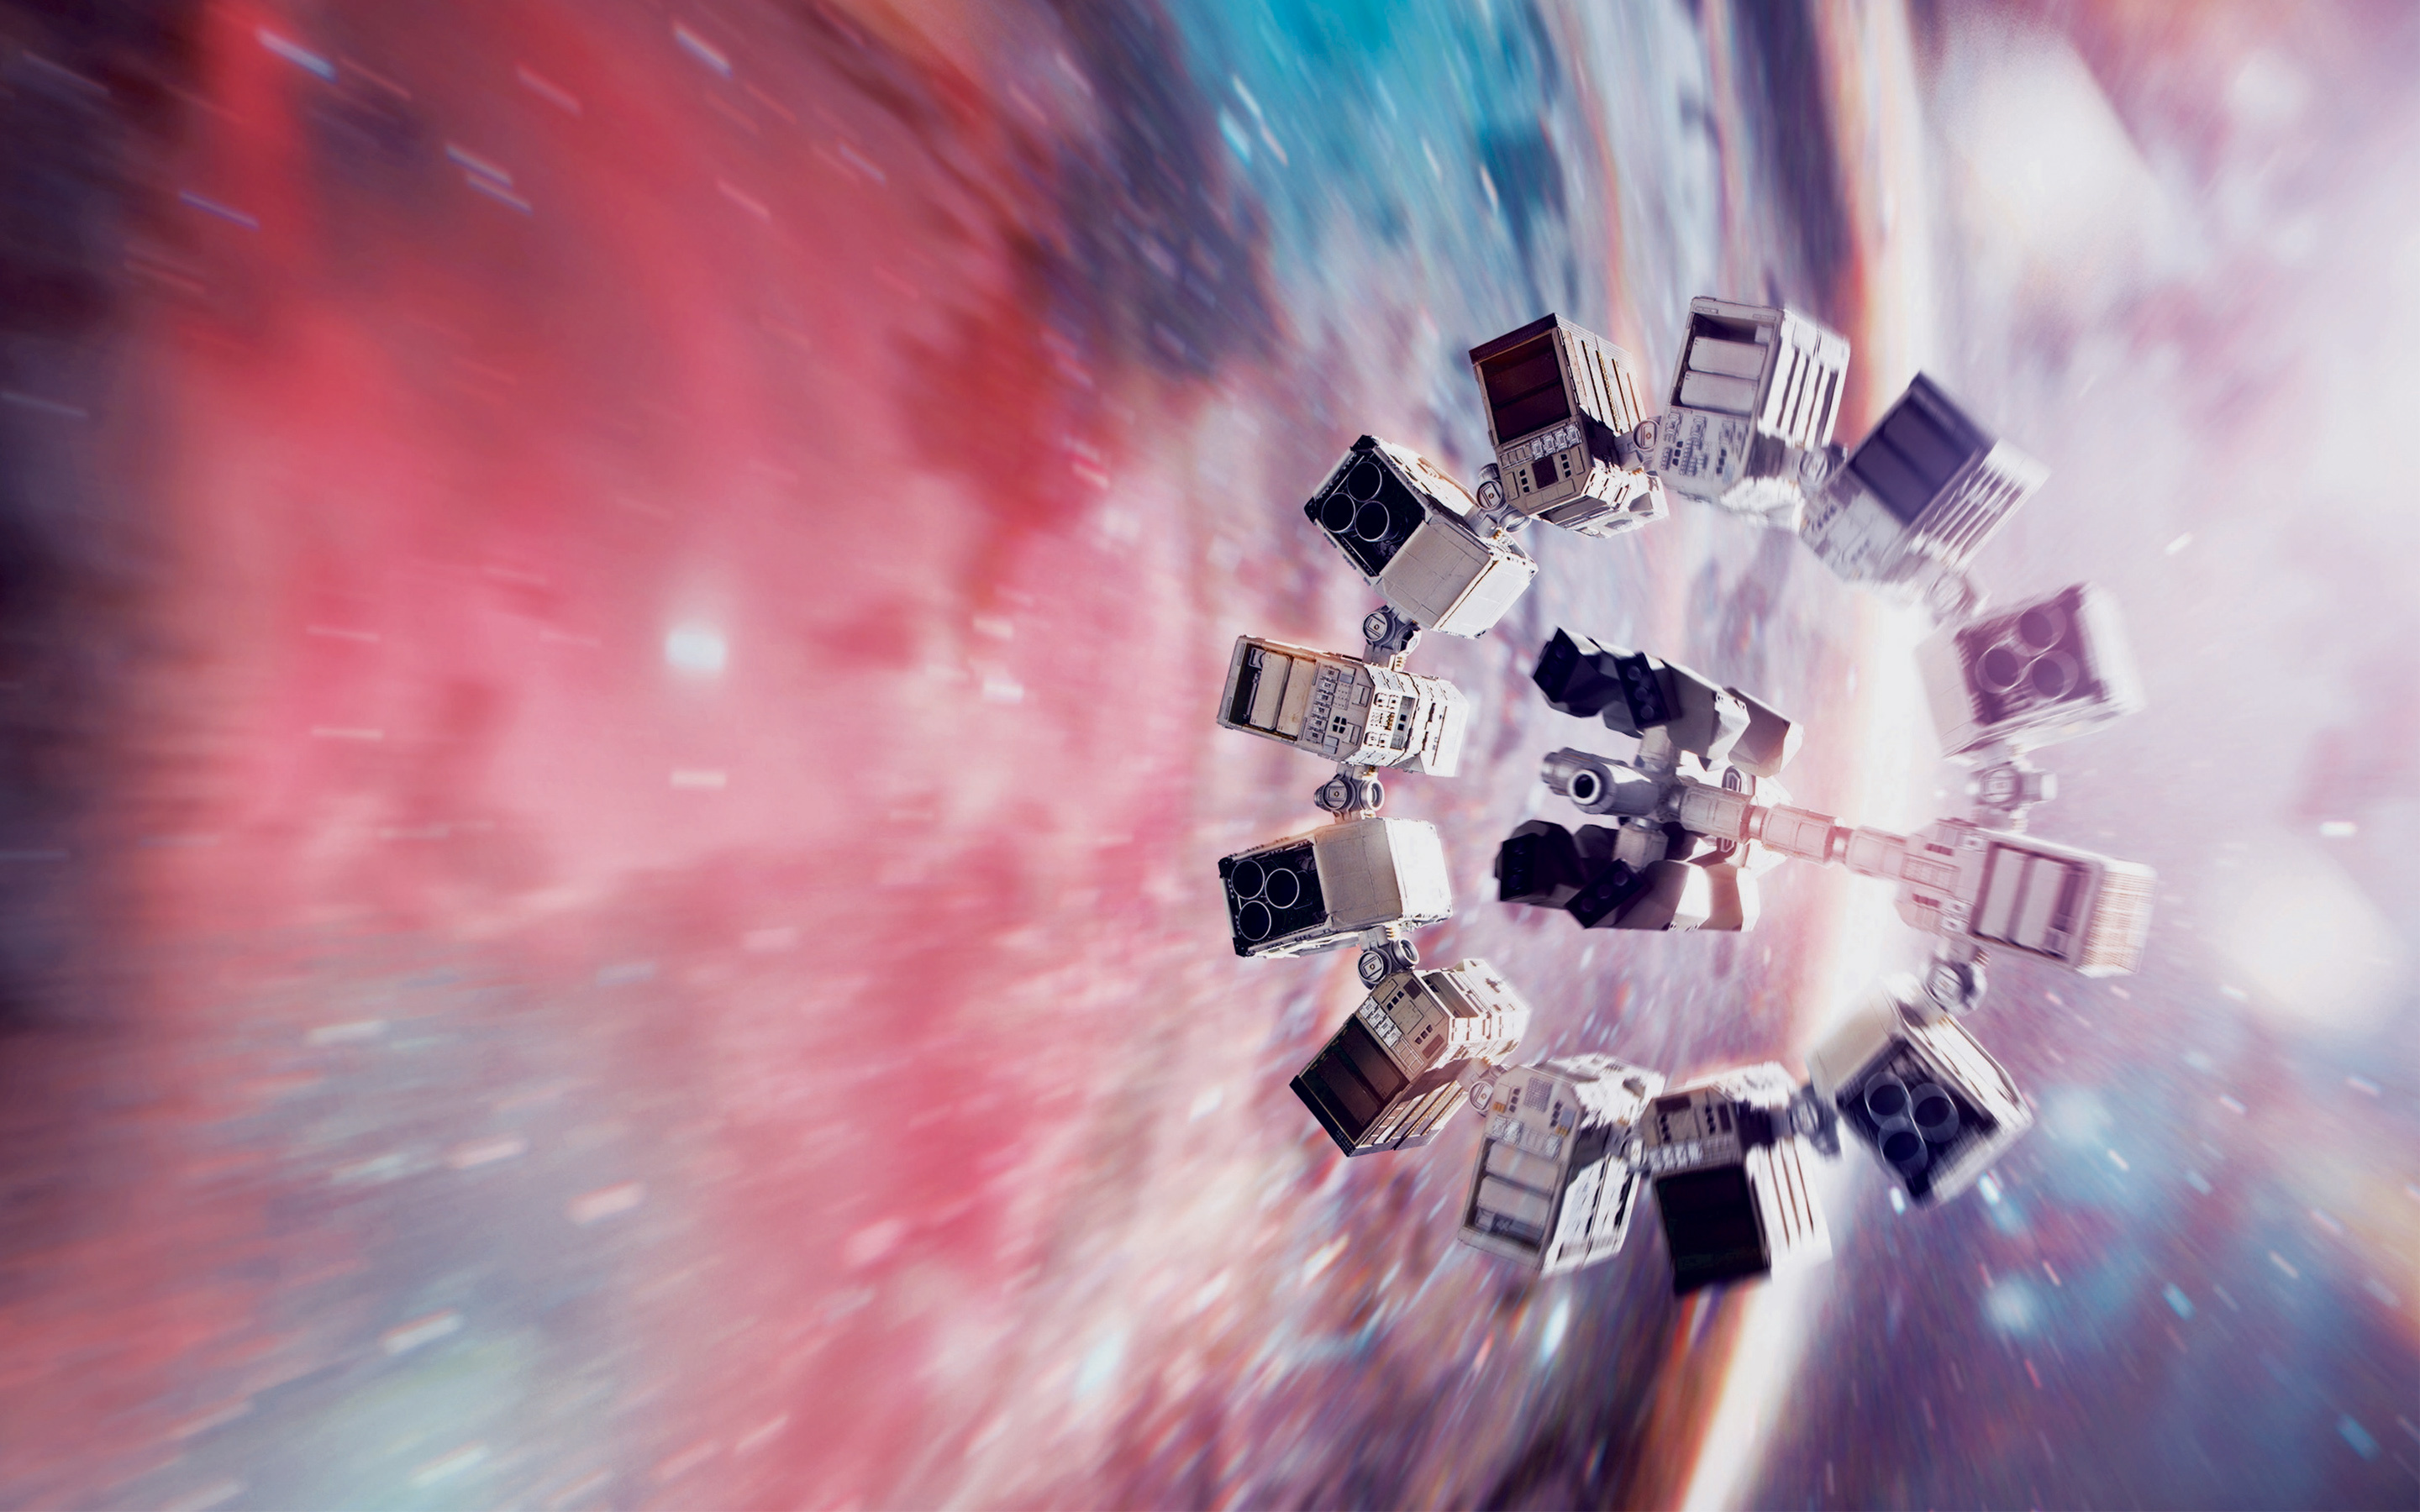 Interstellar: Endurance model, sci-fi spaceship from the movie. 2880x1800 HD Wallpaper.